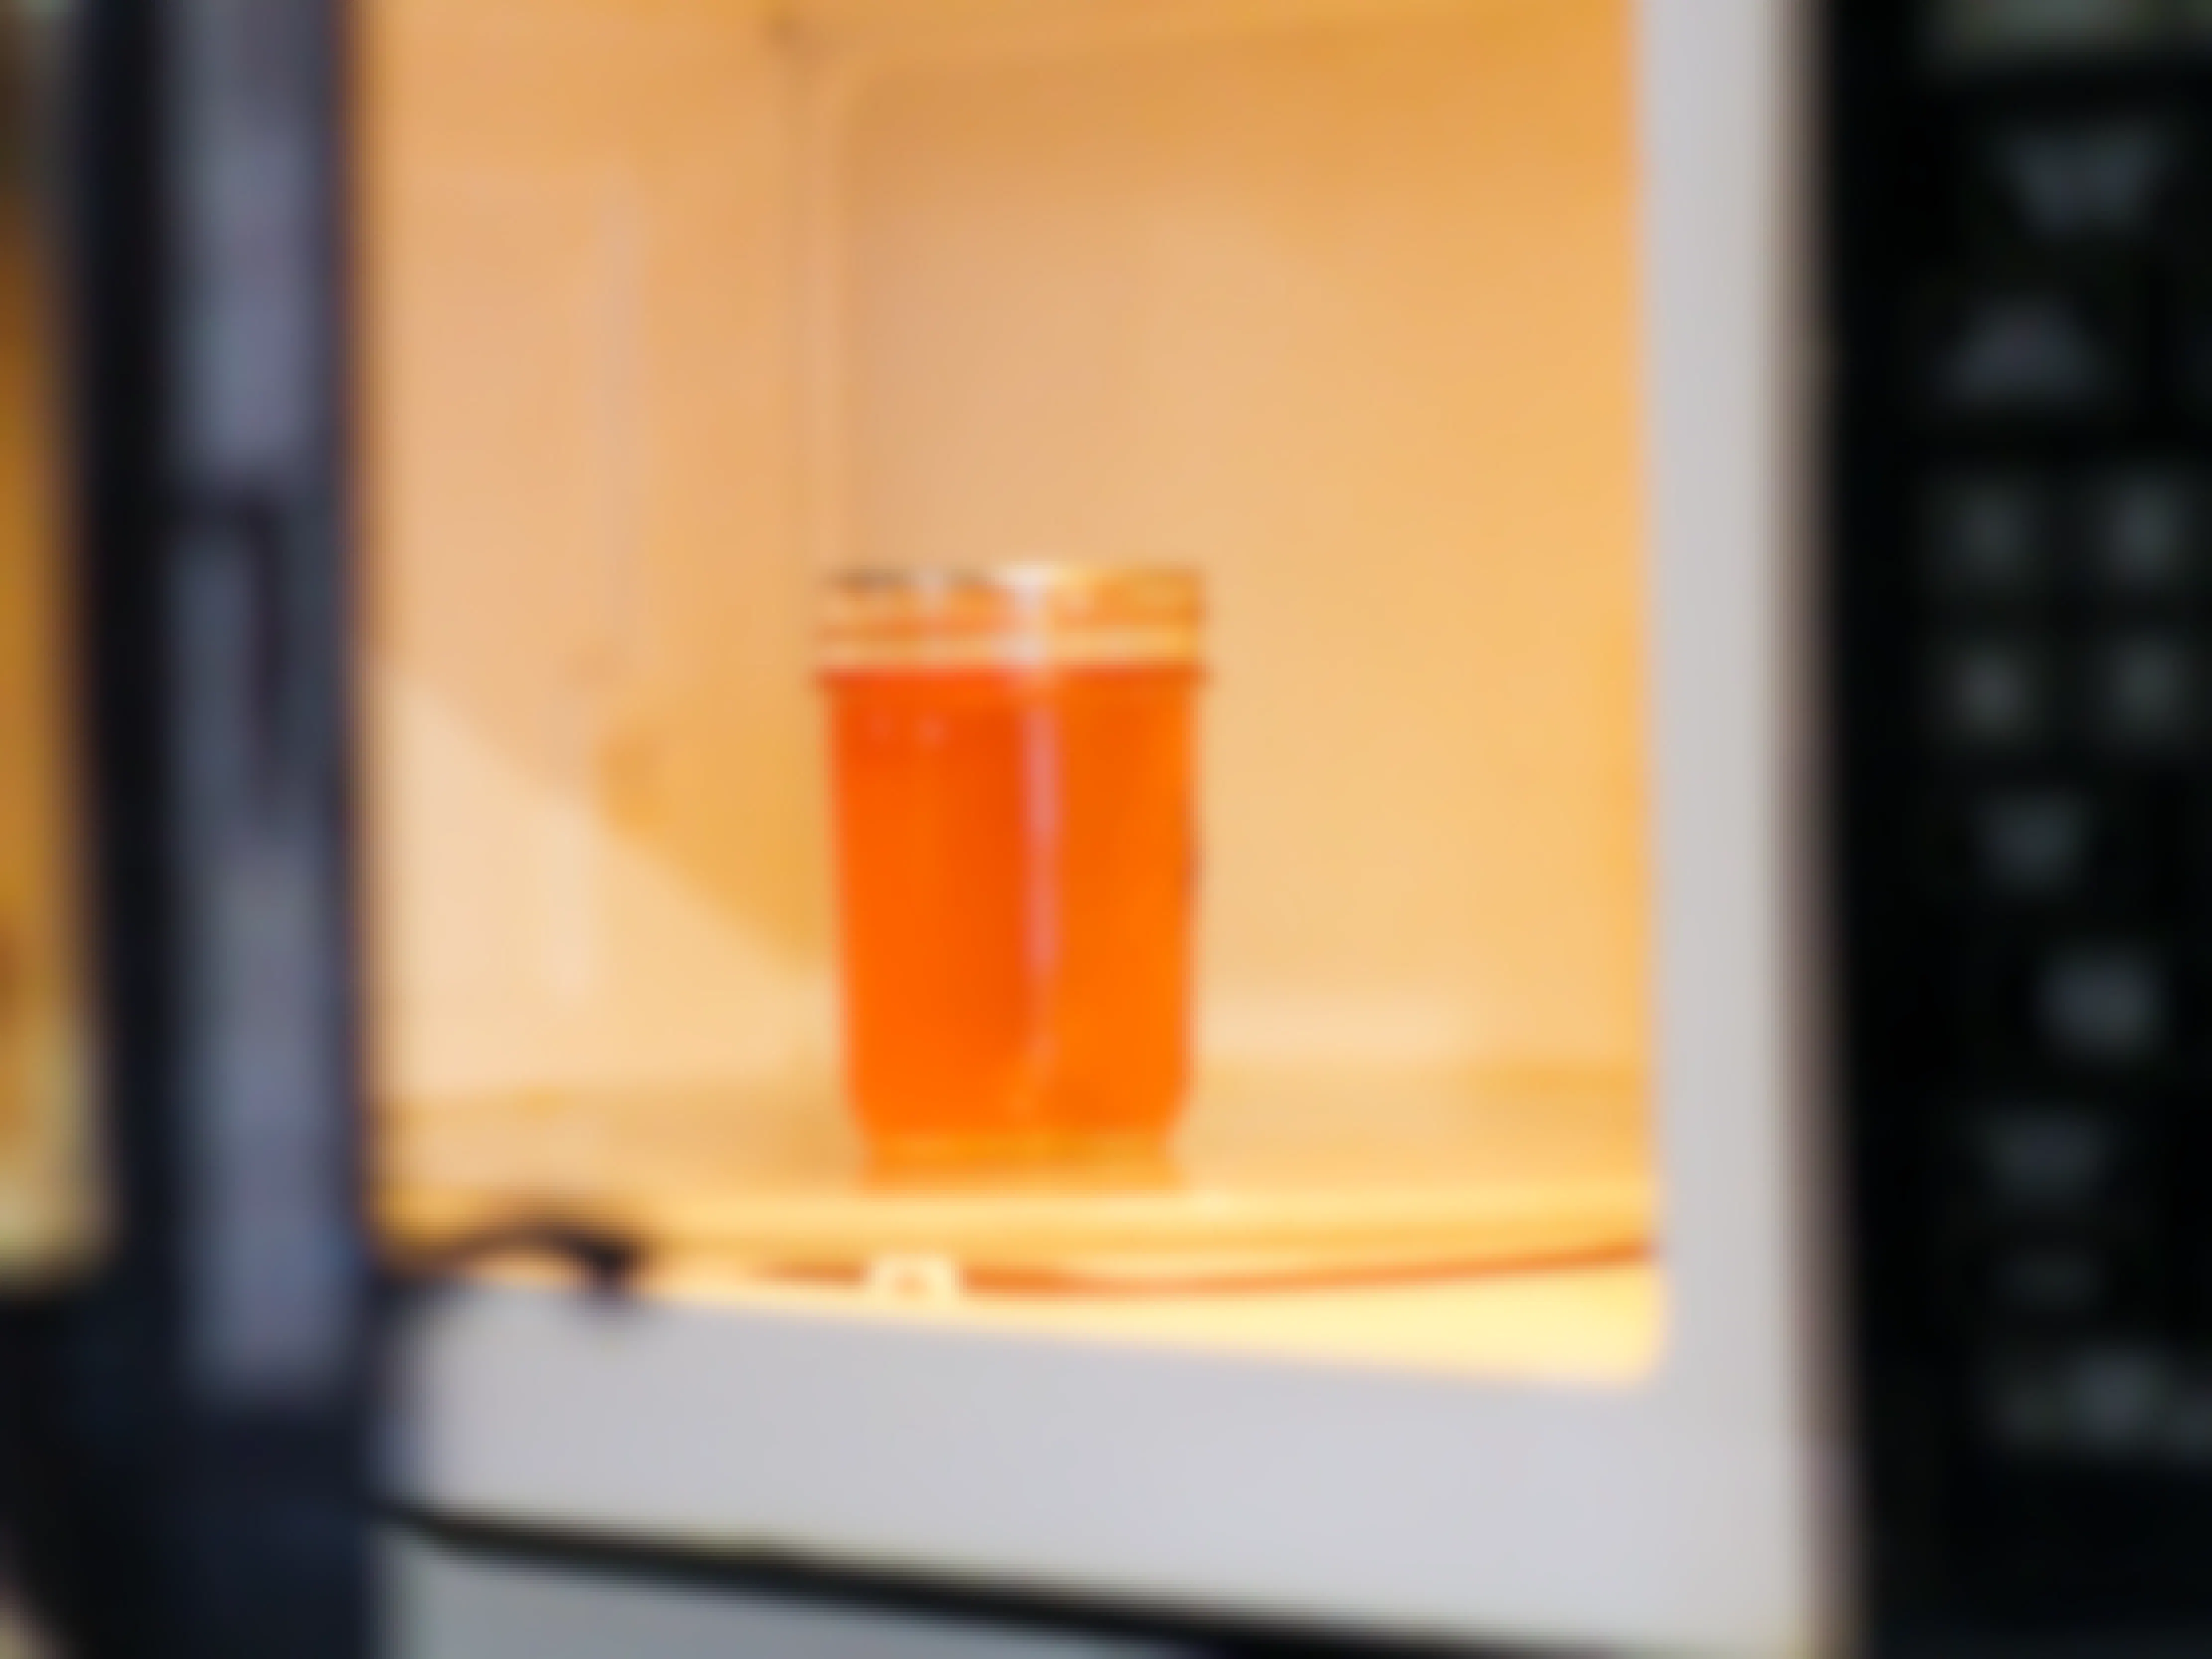 a glass jar of honey inside of a microwave